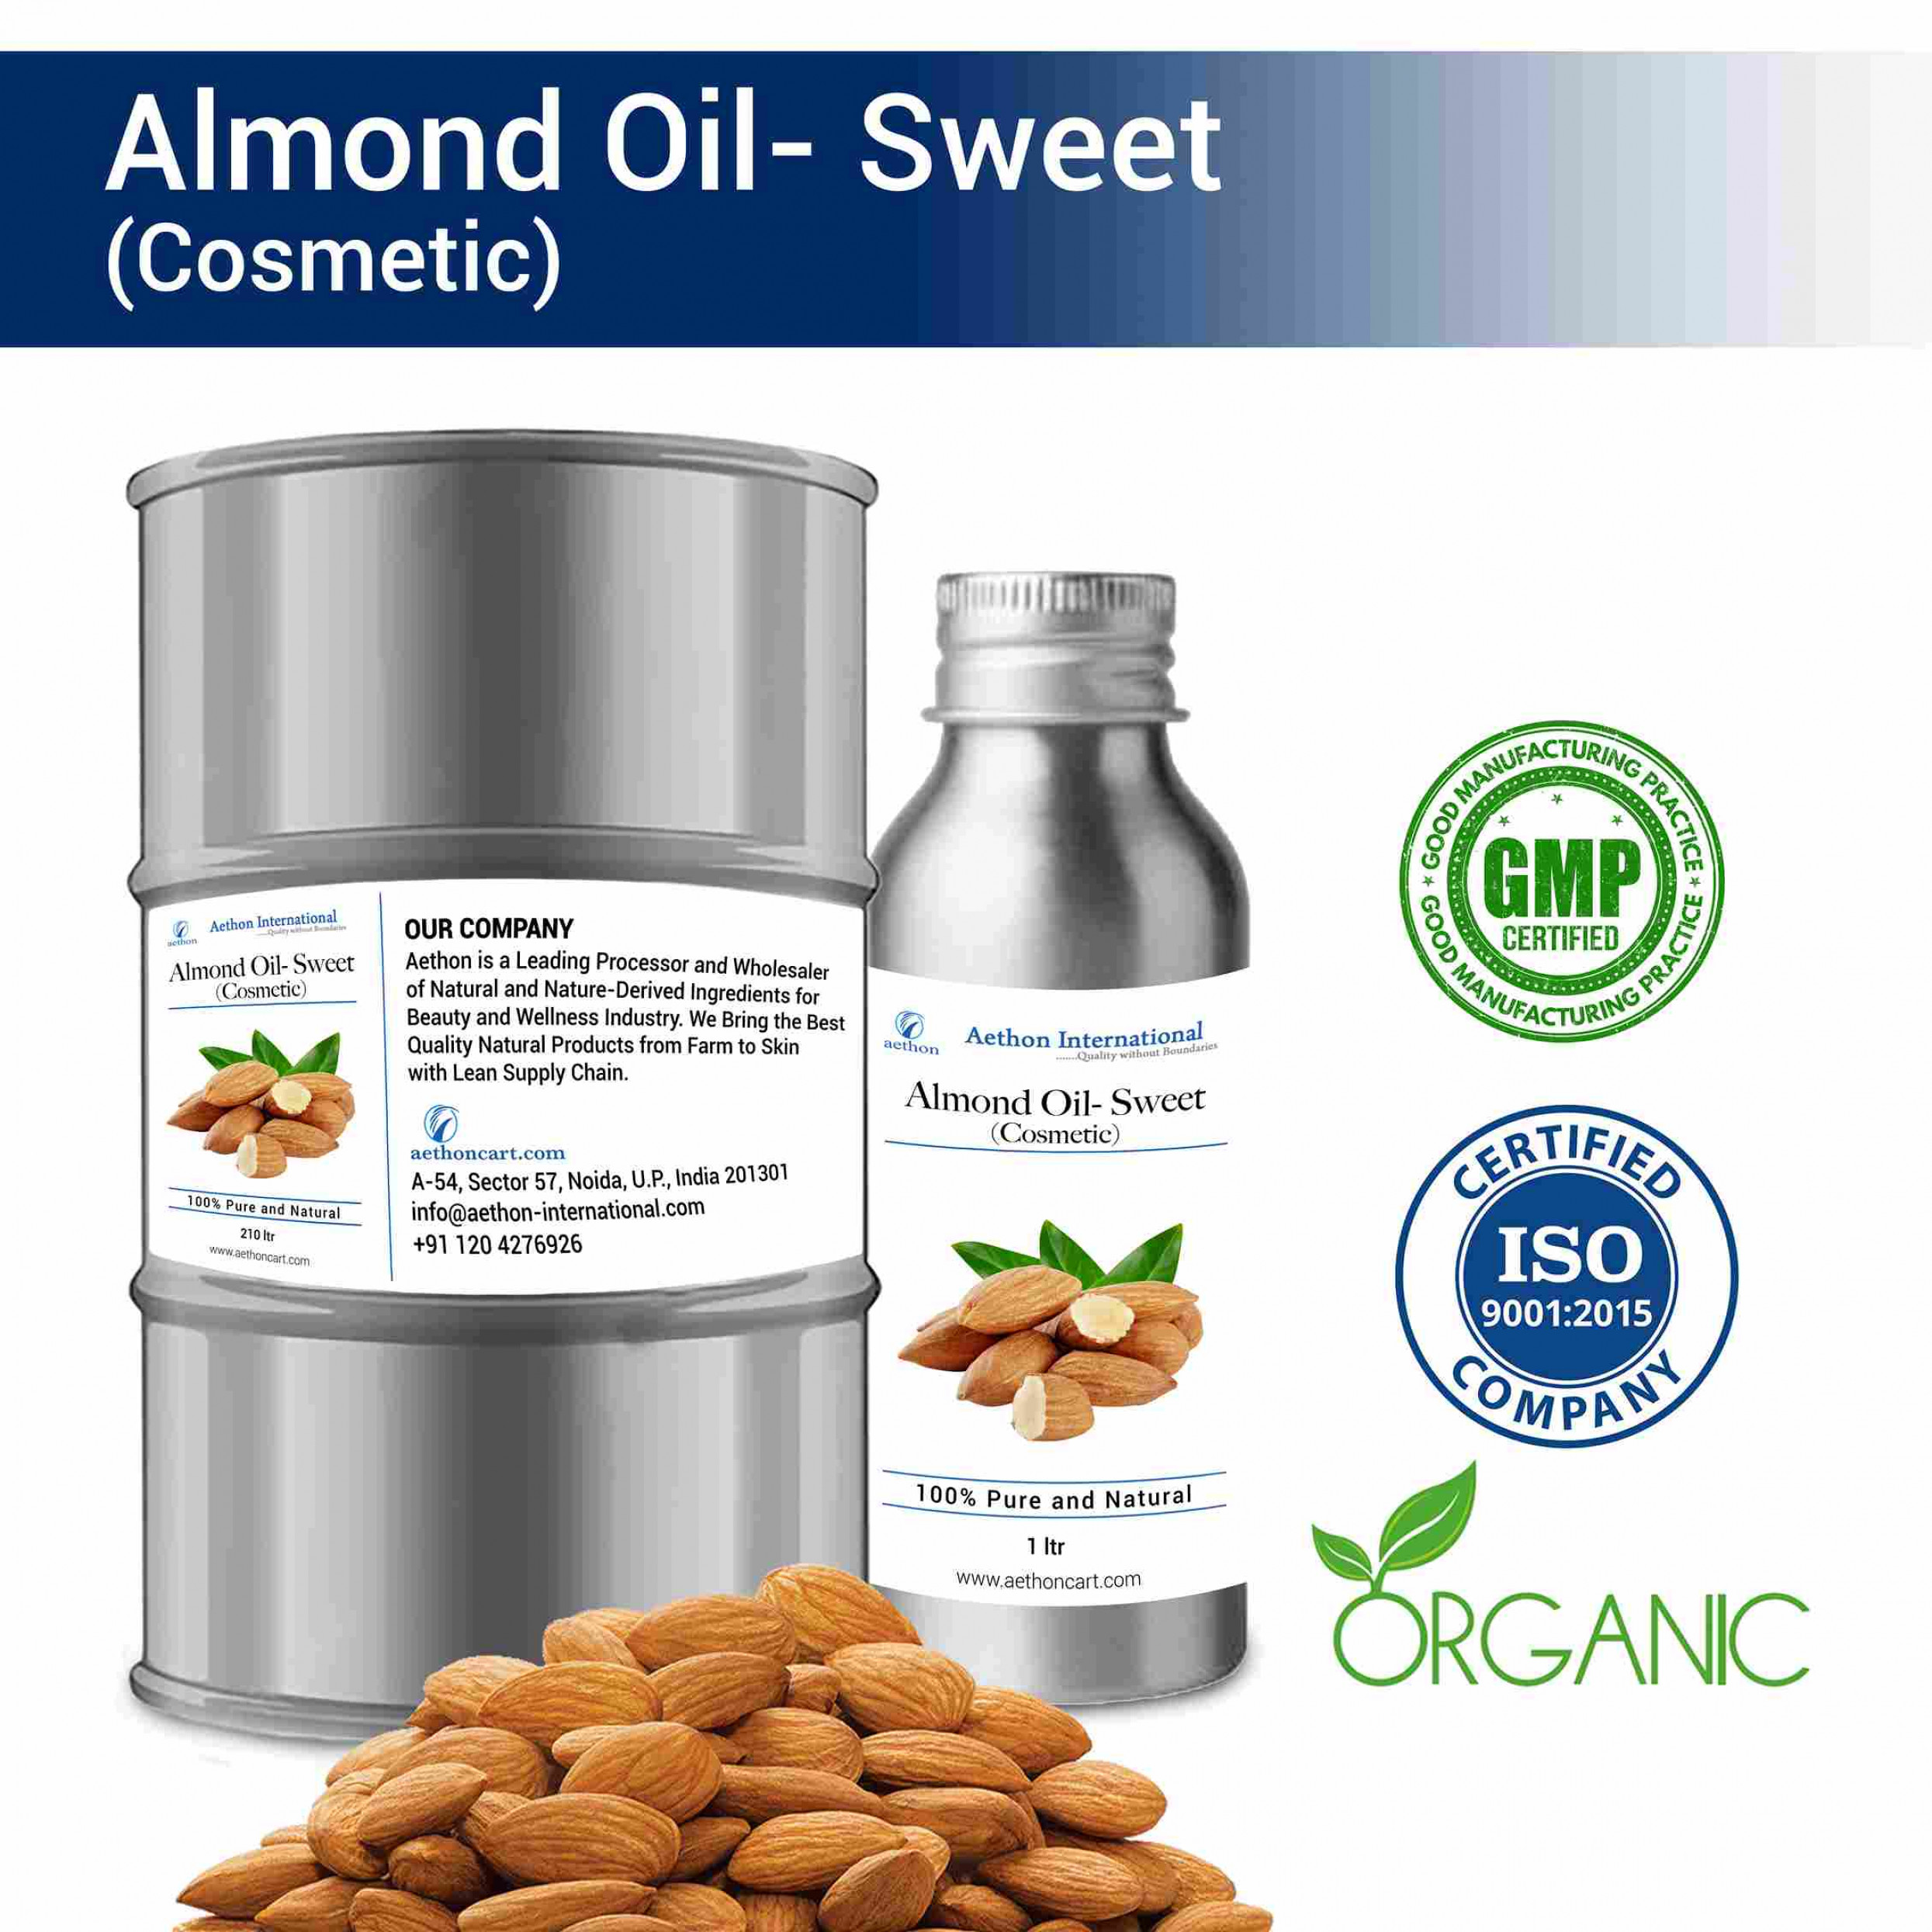 Almond Oil- Sweet (Cosmetic)